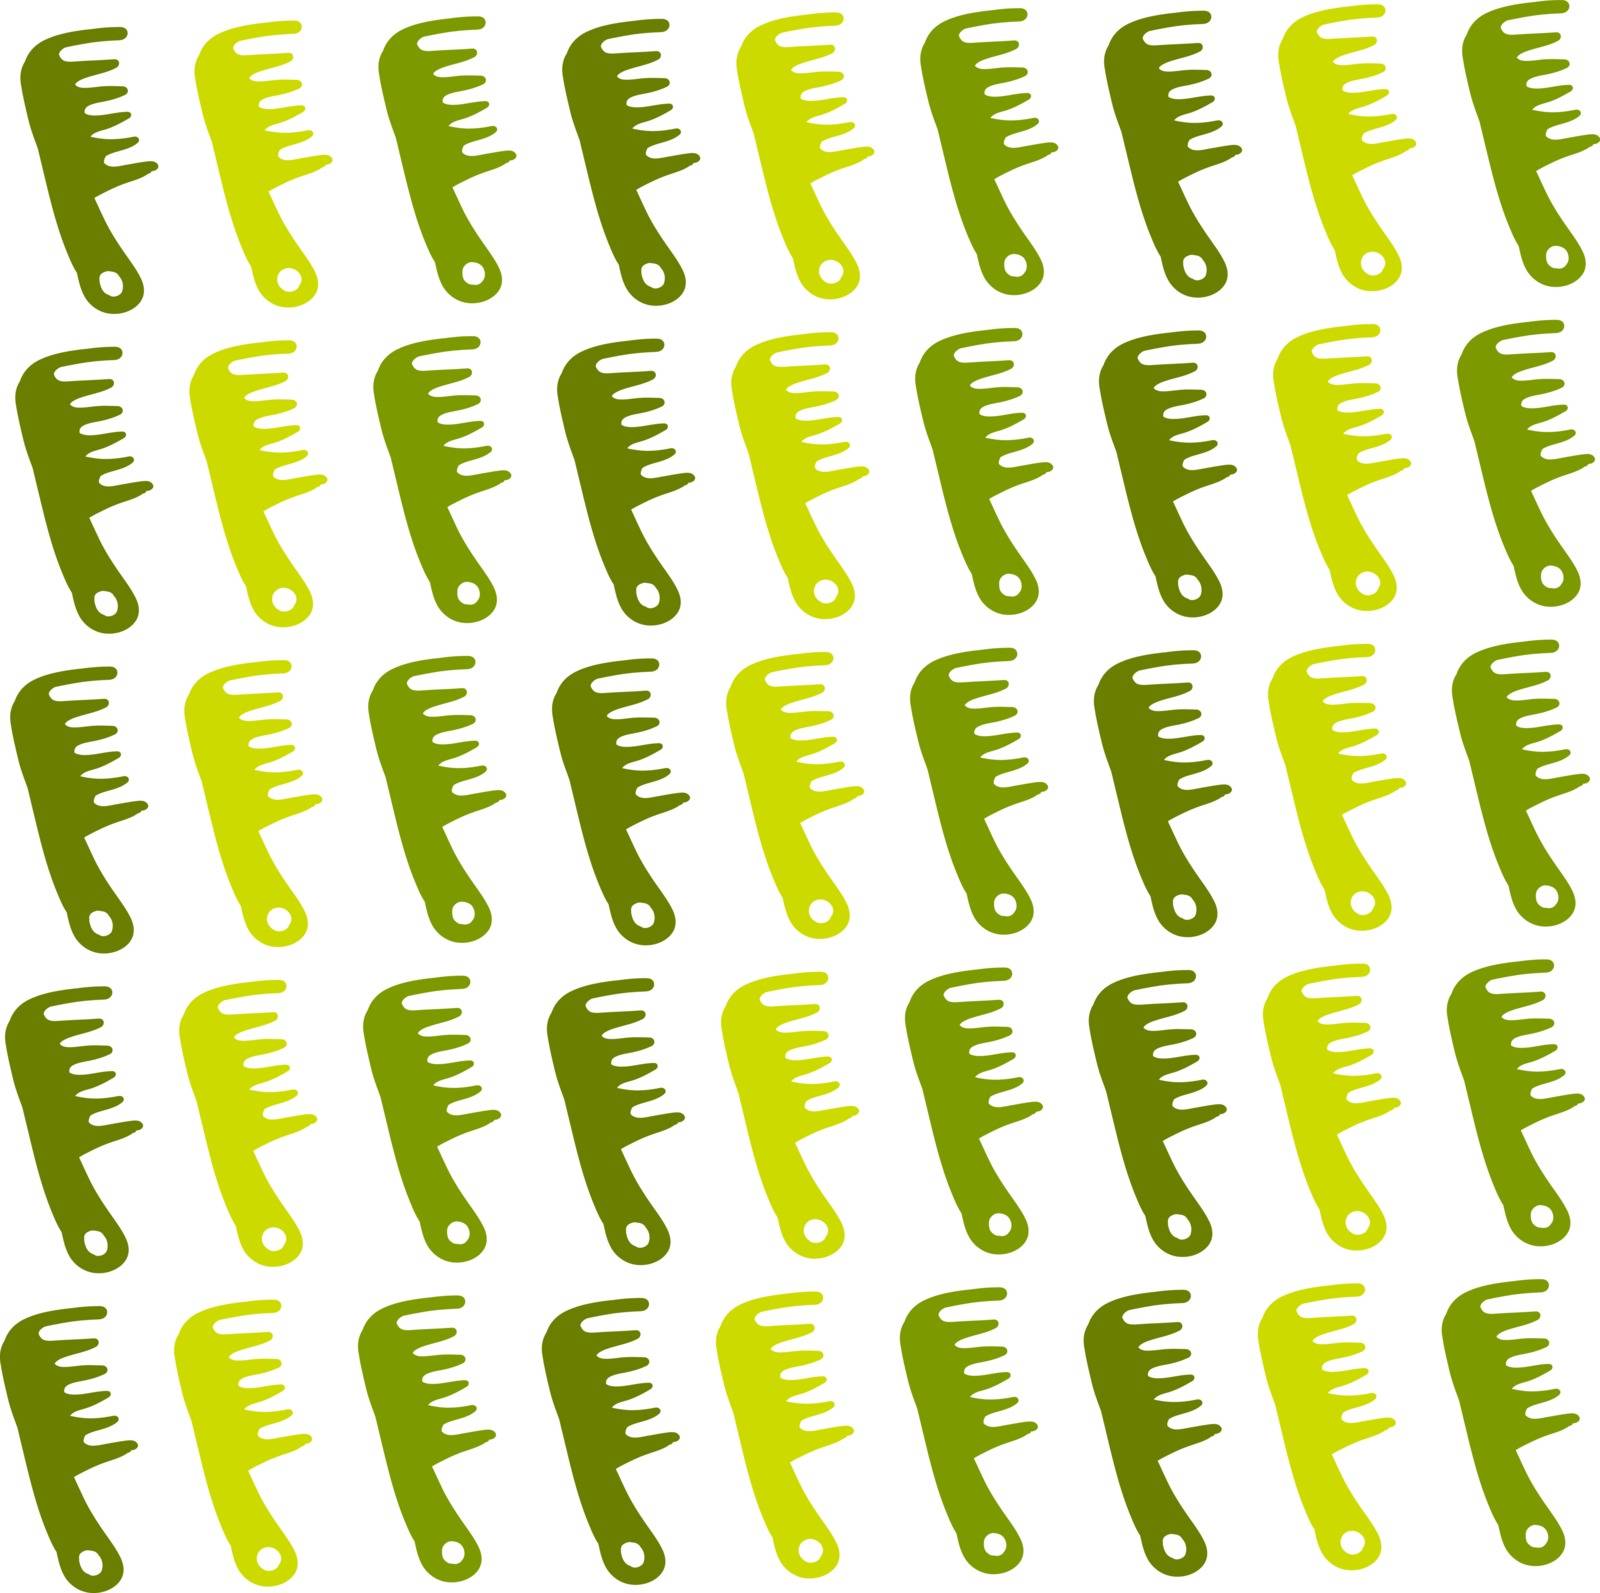 Green comb wallpaper, illustration, vector on white background.